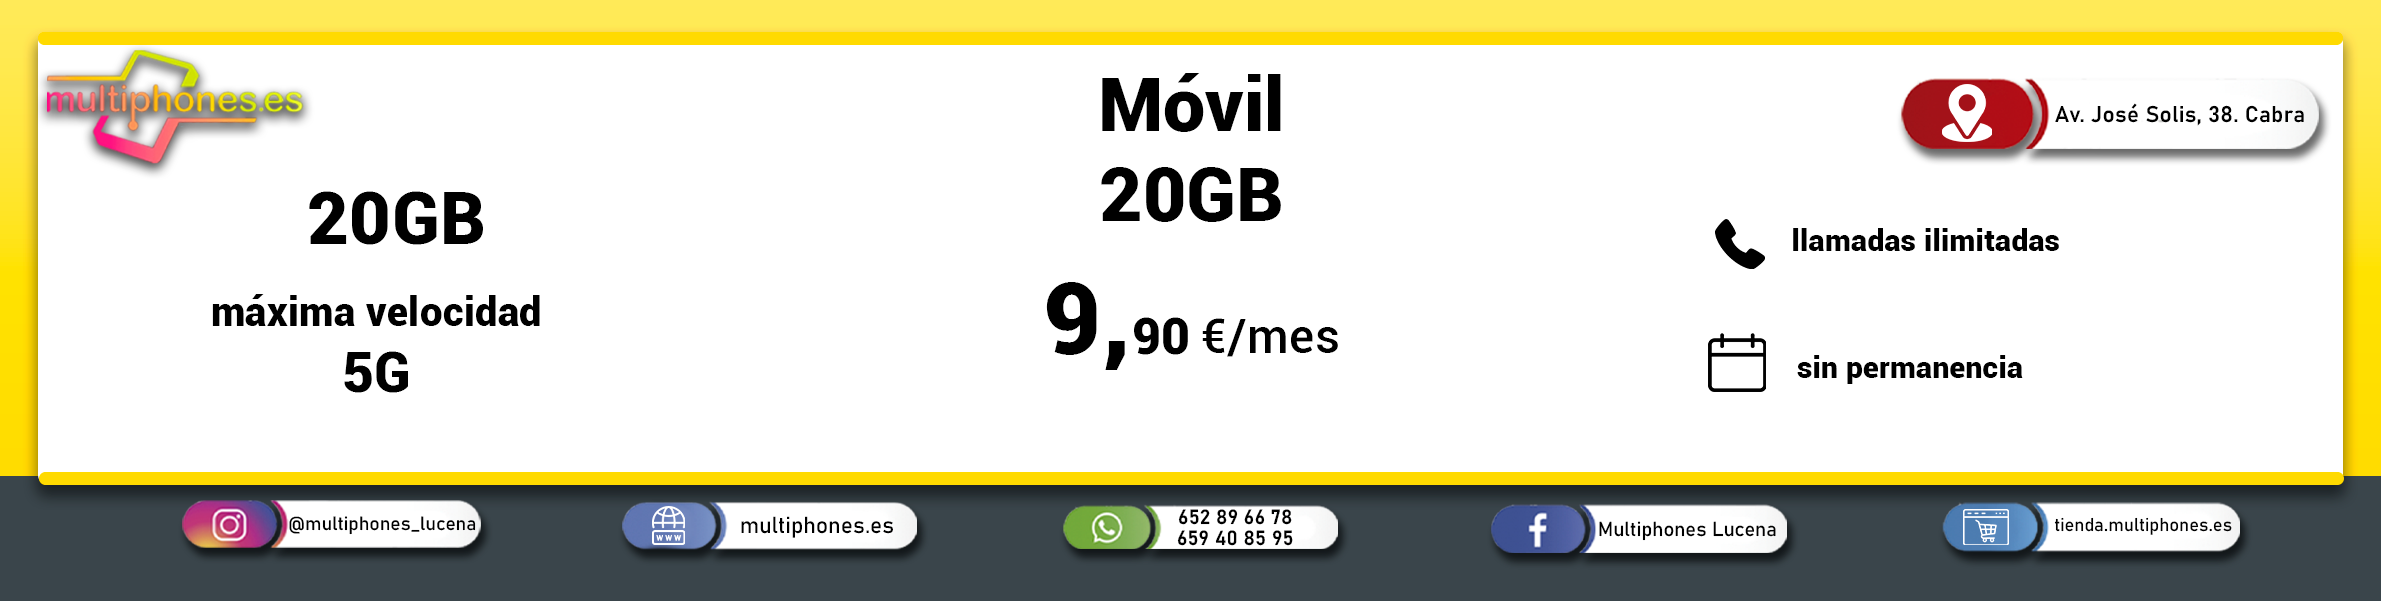 MASMOVIL – MÓVIL 20GB y llamadas ilimitadas.